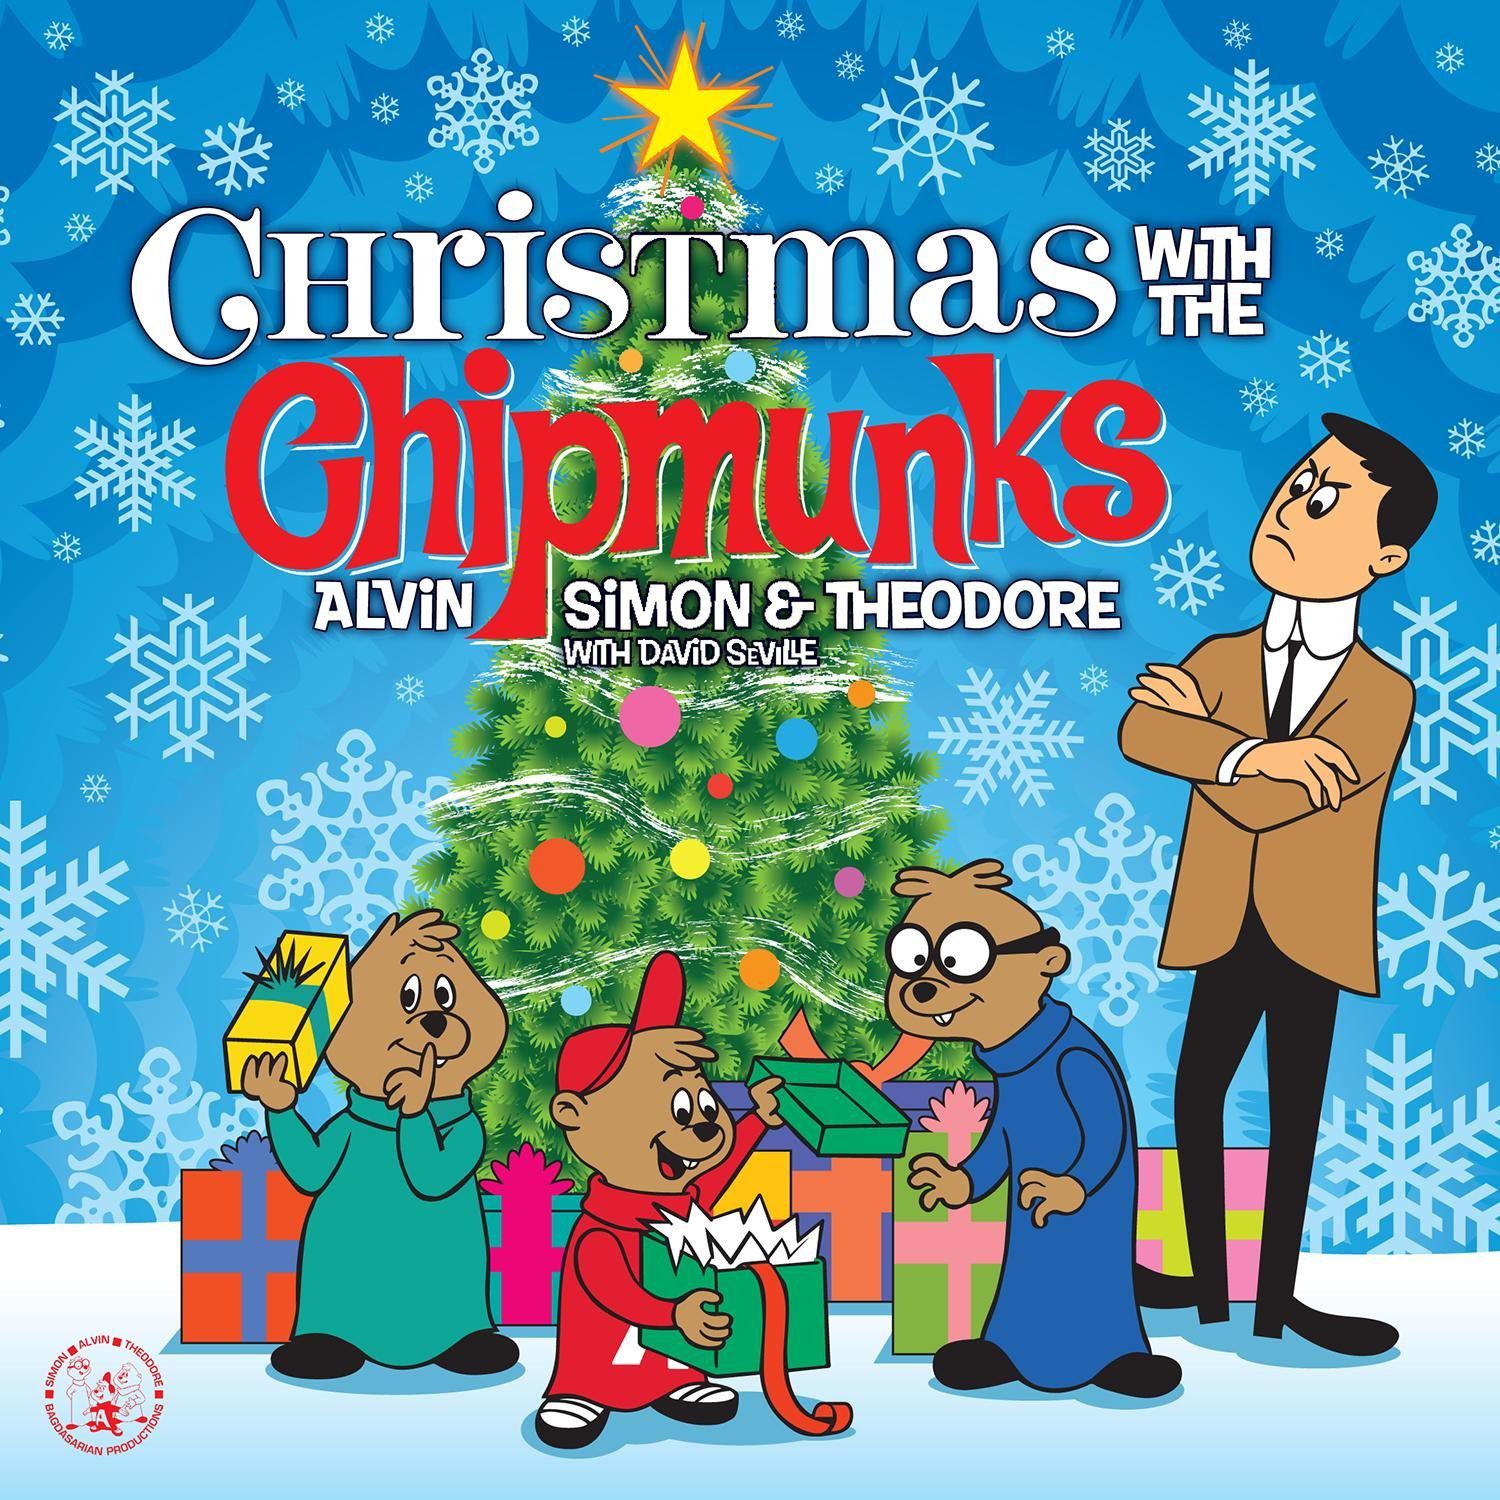 Alvin and the chipmunks christmas song lyrics